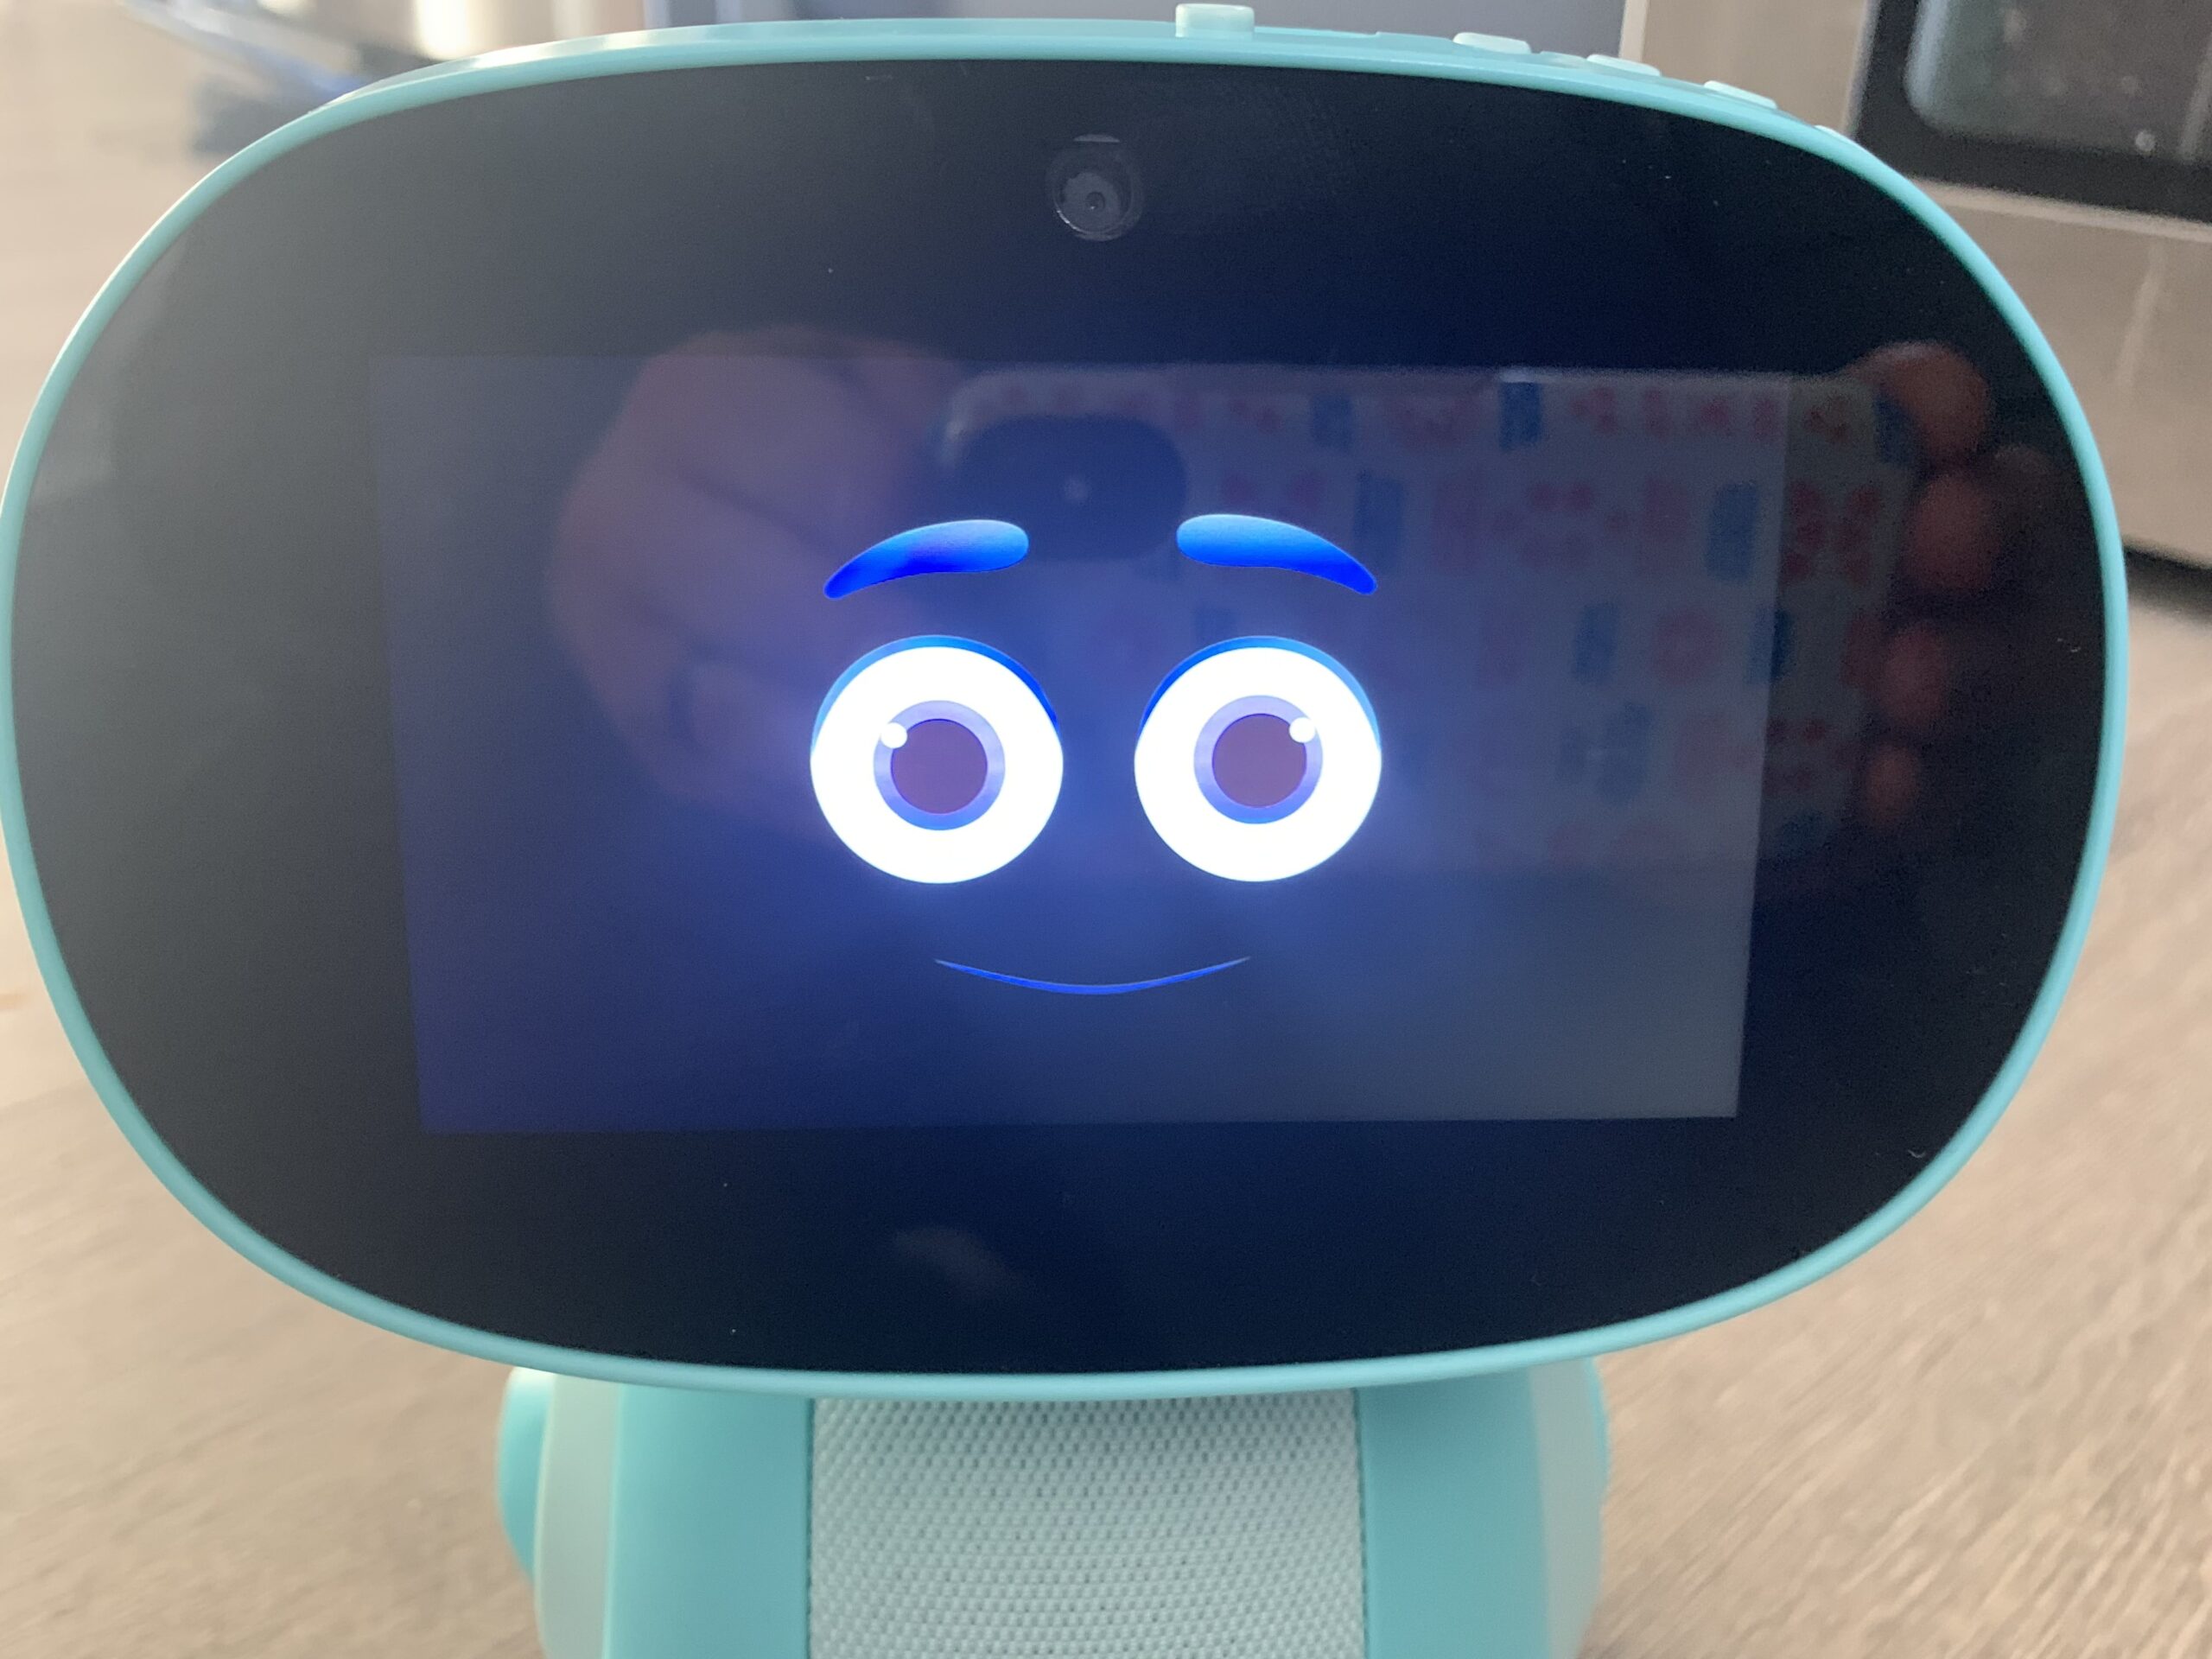  Miko 3: AI-Powered Smart Robot for Kids